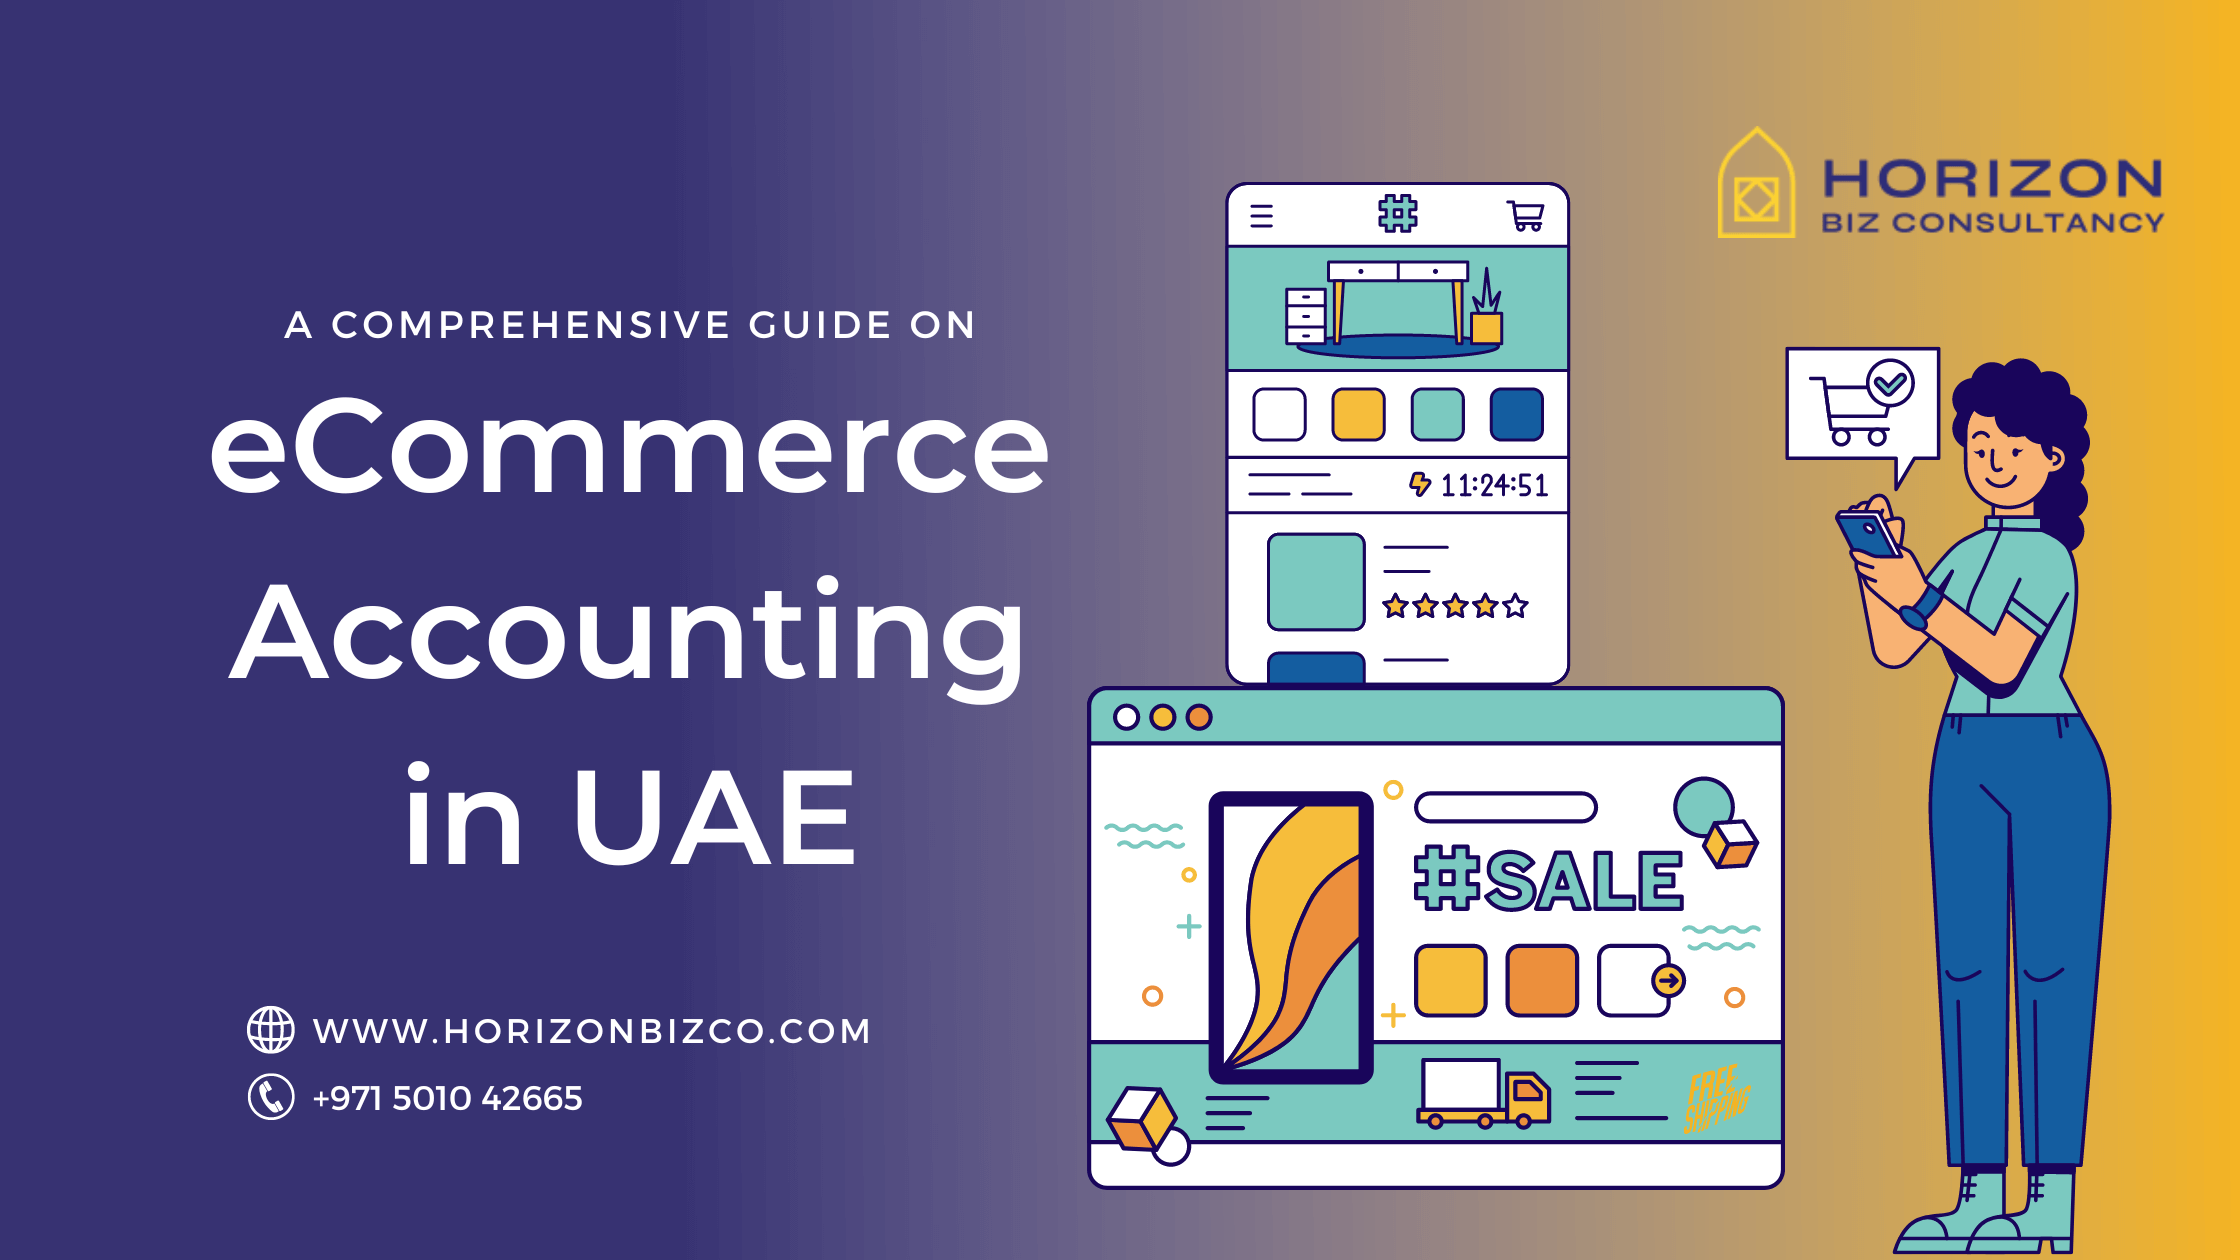 eCommerce Accounting in UAE